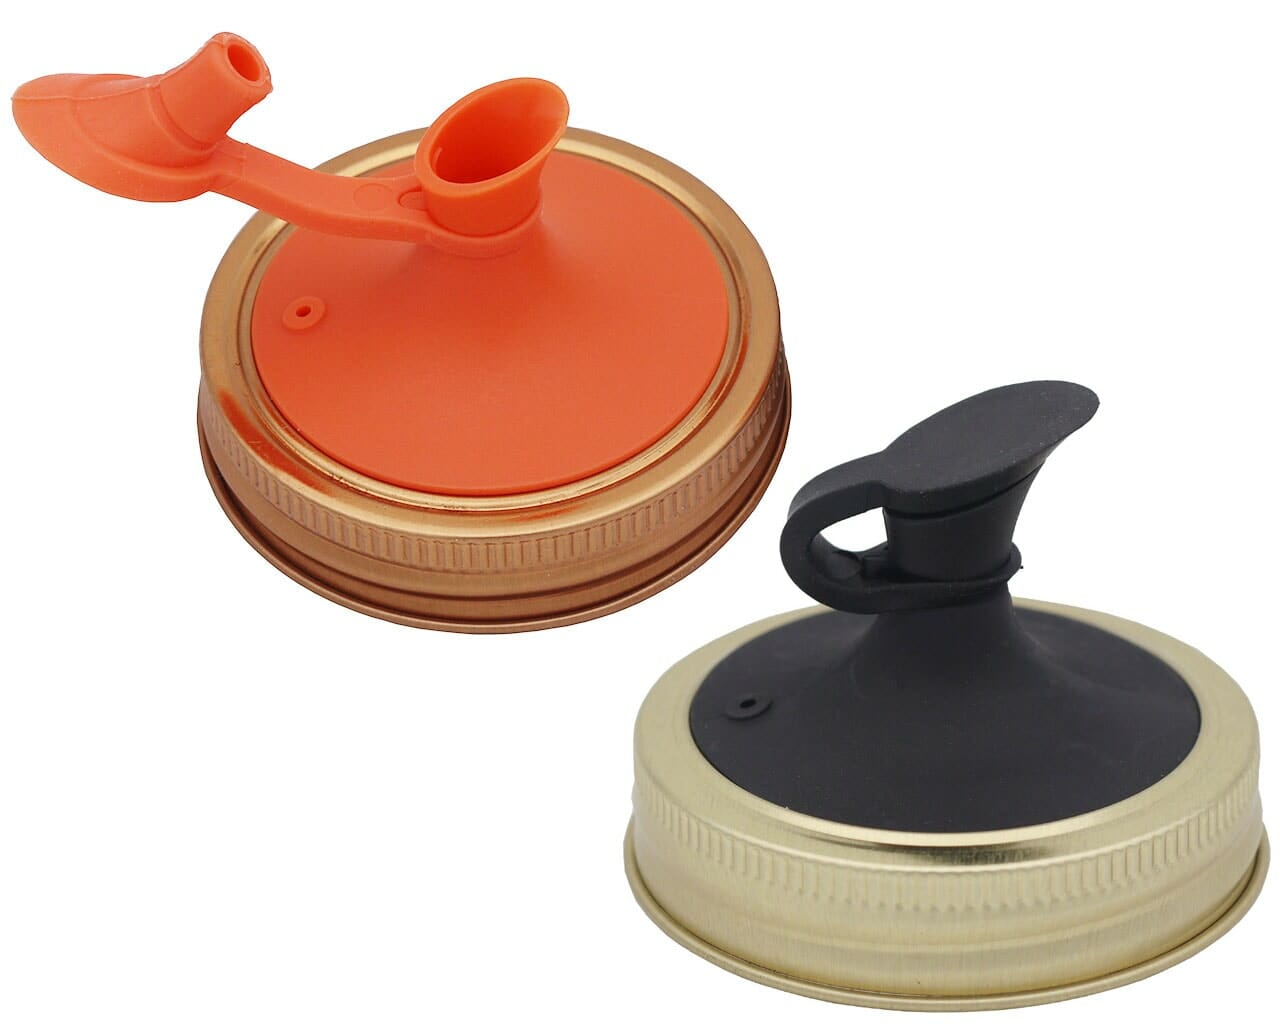 jarware-orange-black-oil-cruet-pour-lid-with-regular-mouth-mason-jar-lifestyle-gold-copper-bands-open-closed